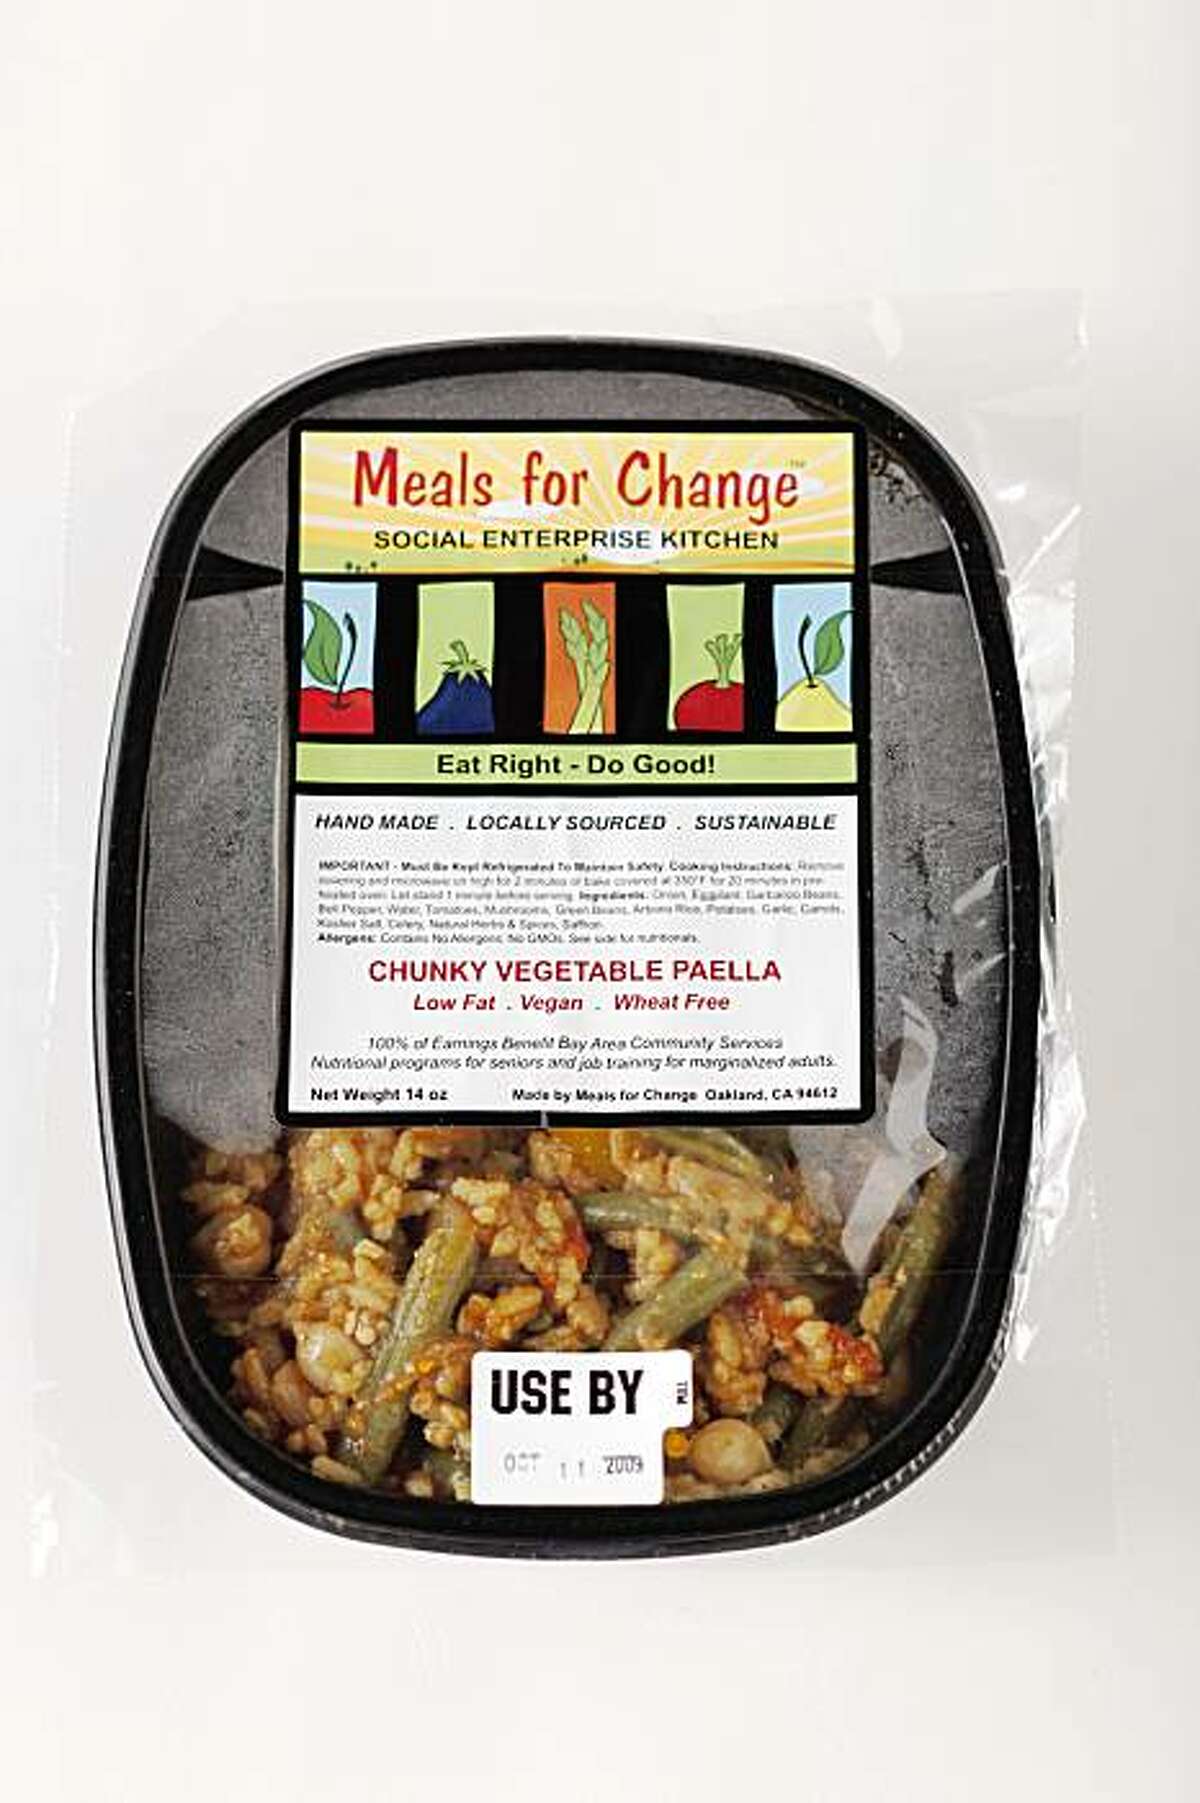 Meals for Change, rrepared meals to serve 2 people, profits benefit Meals on Wheels in San Francisco, Calif., on October 7, 2009.